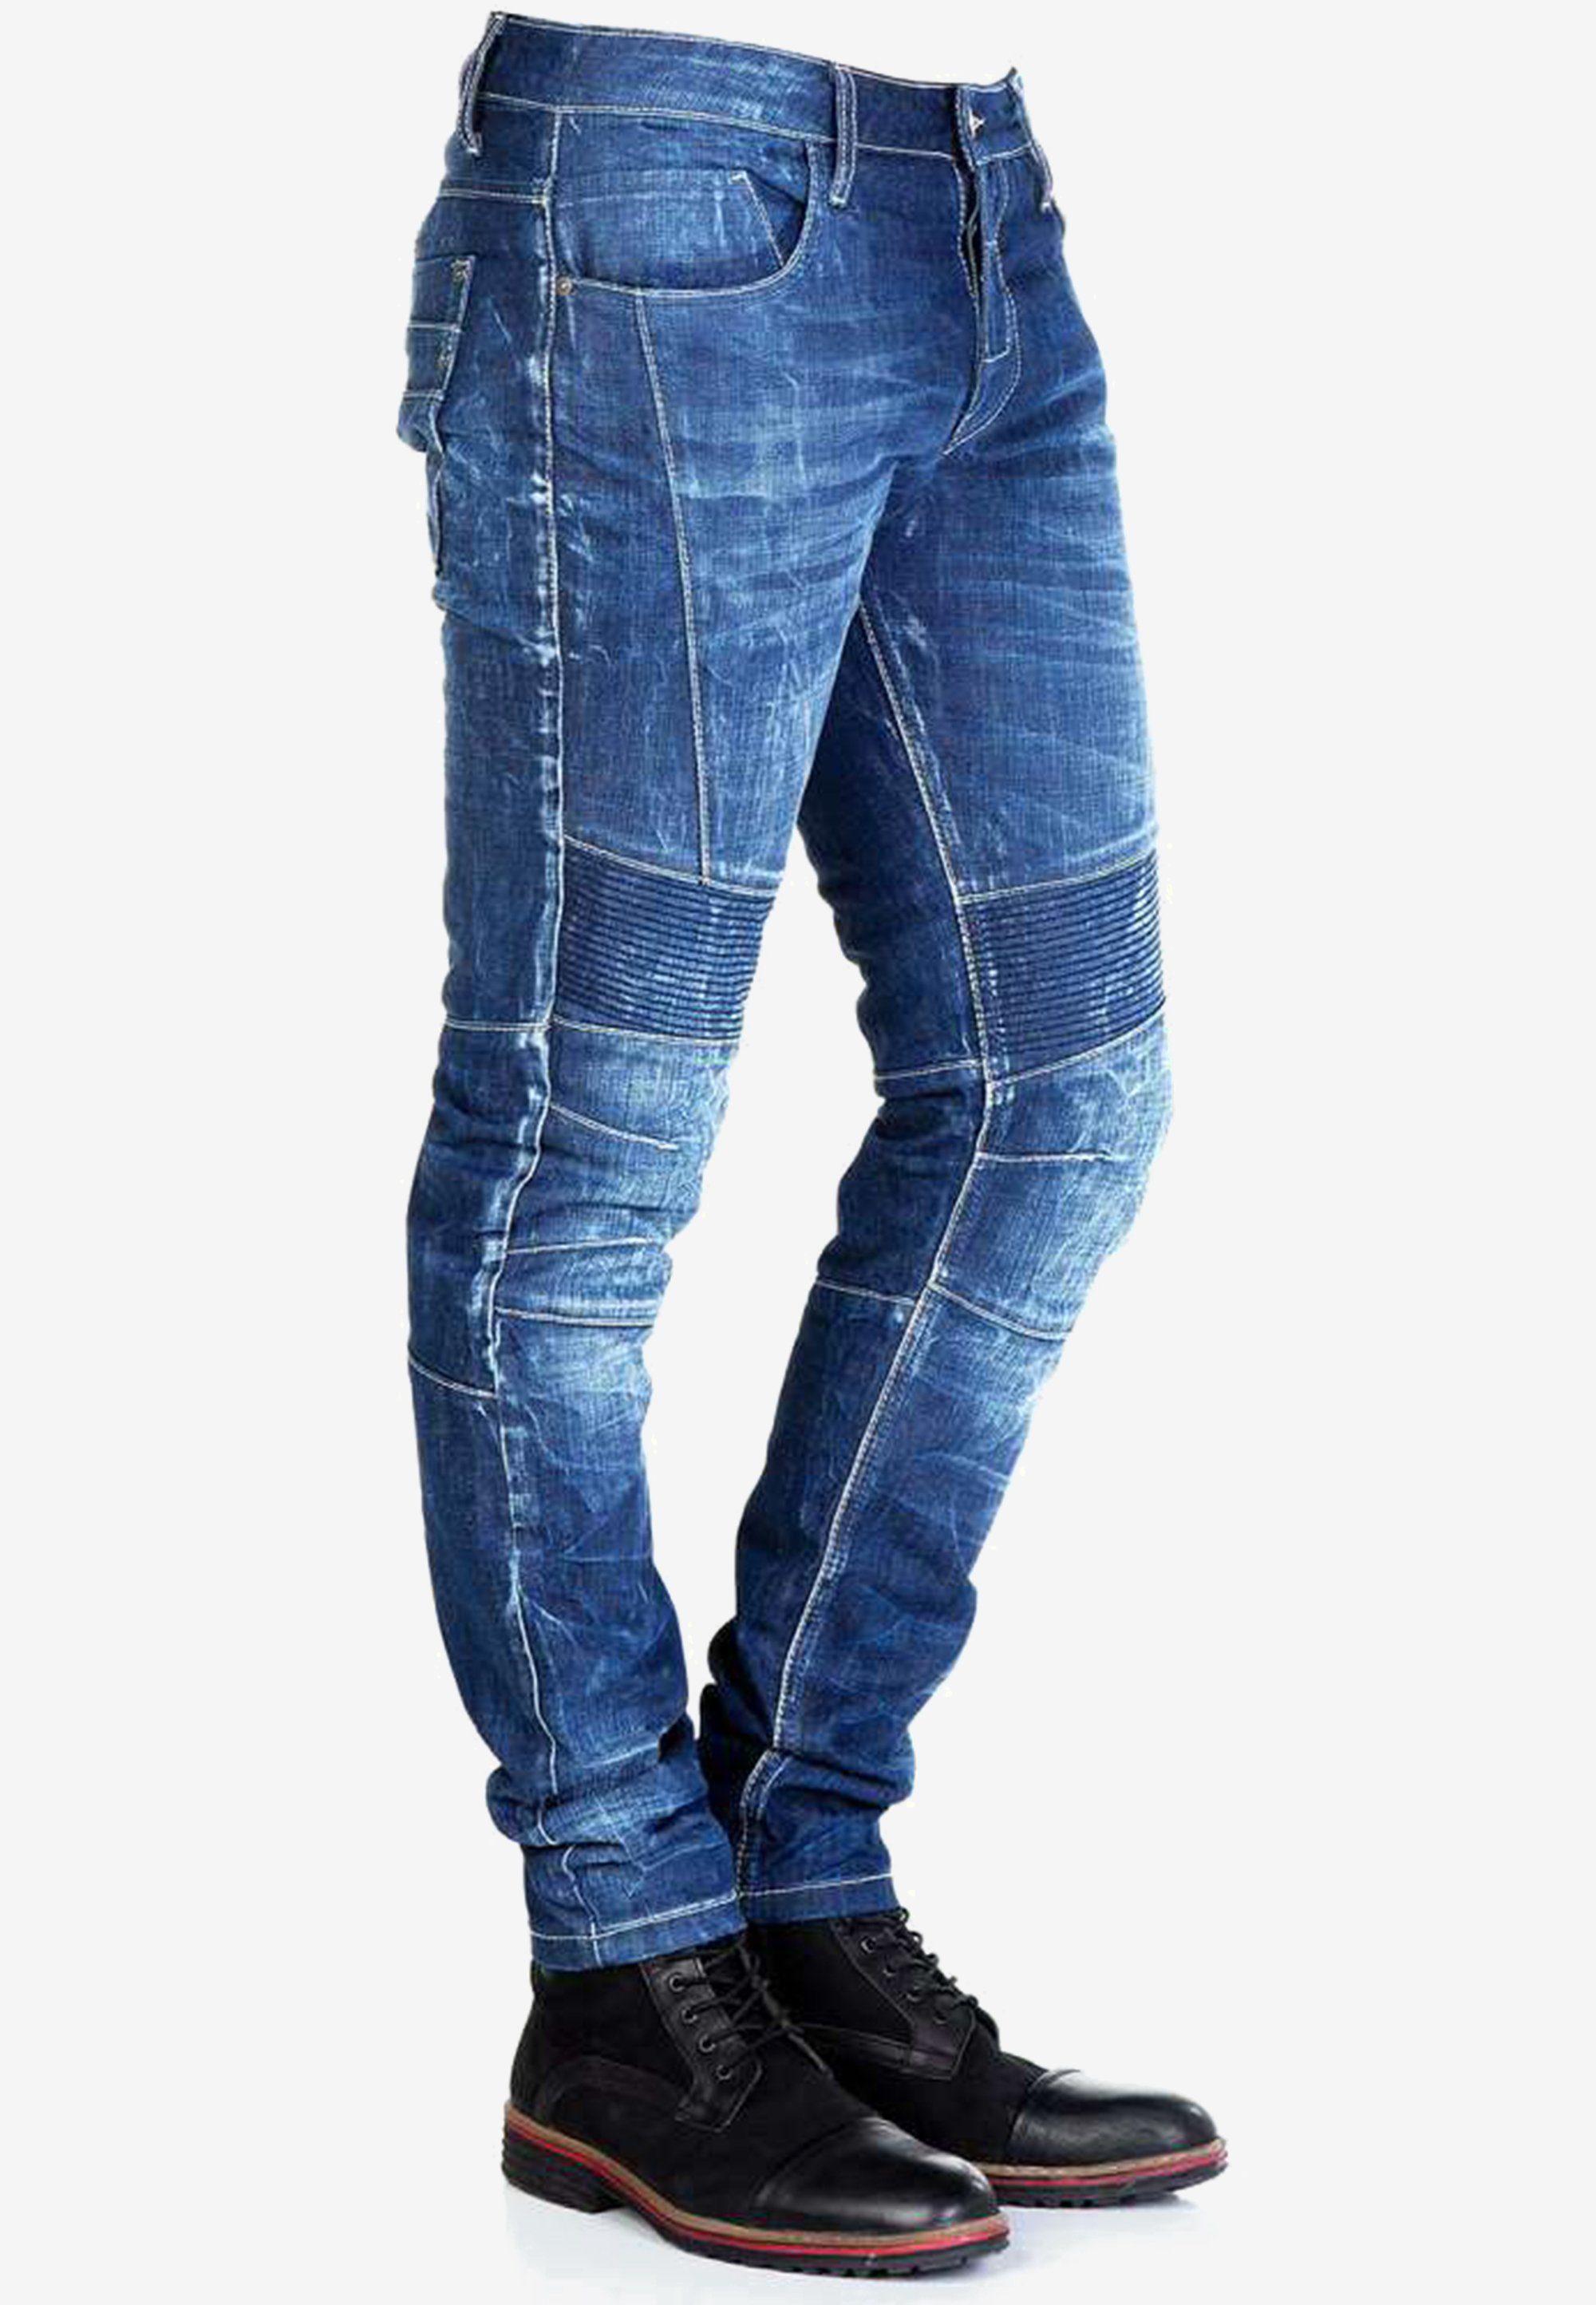 Baxx mit Straight coolen Bequeme Fit Cipo Nahtdetails & Jeans in